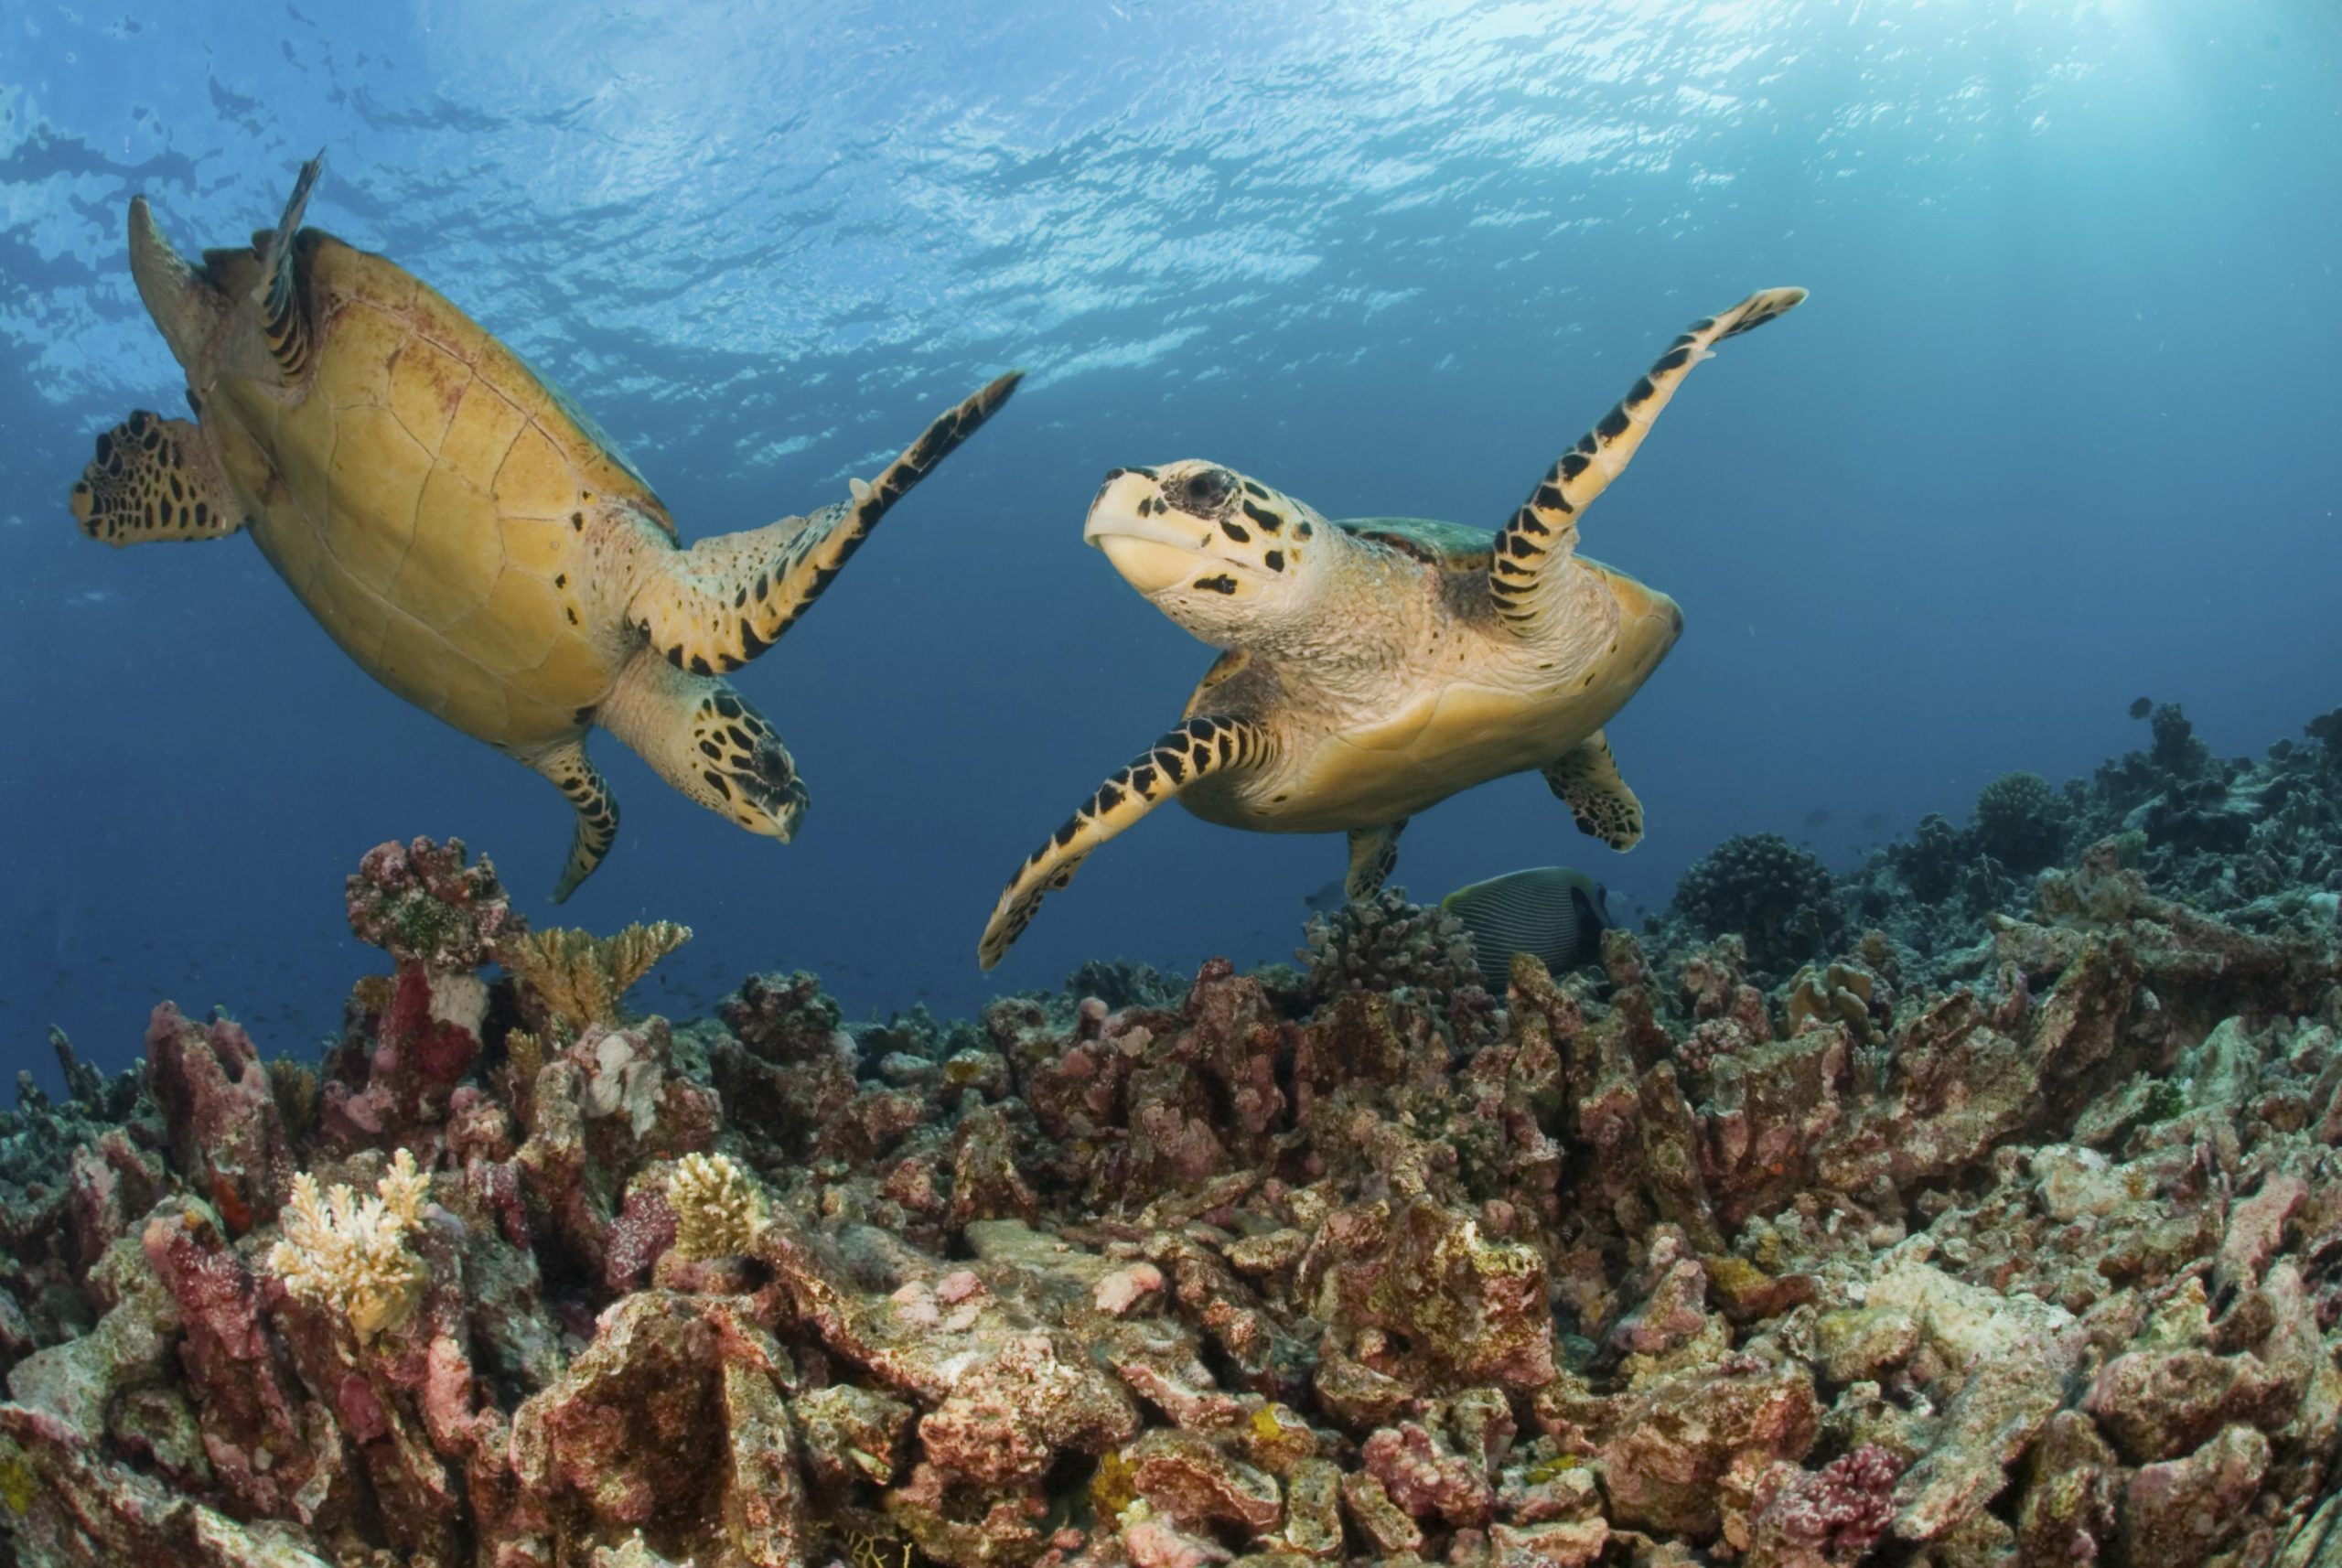 Mozambique under water ocean life - turtles